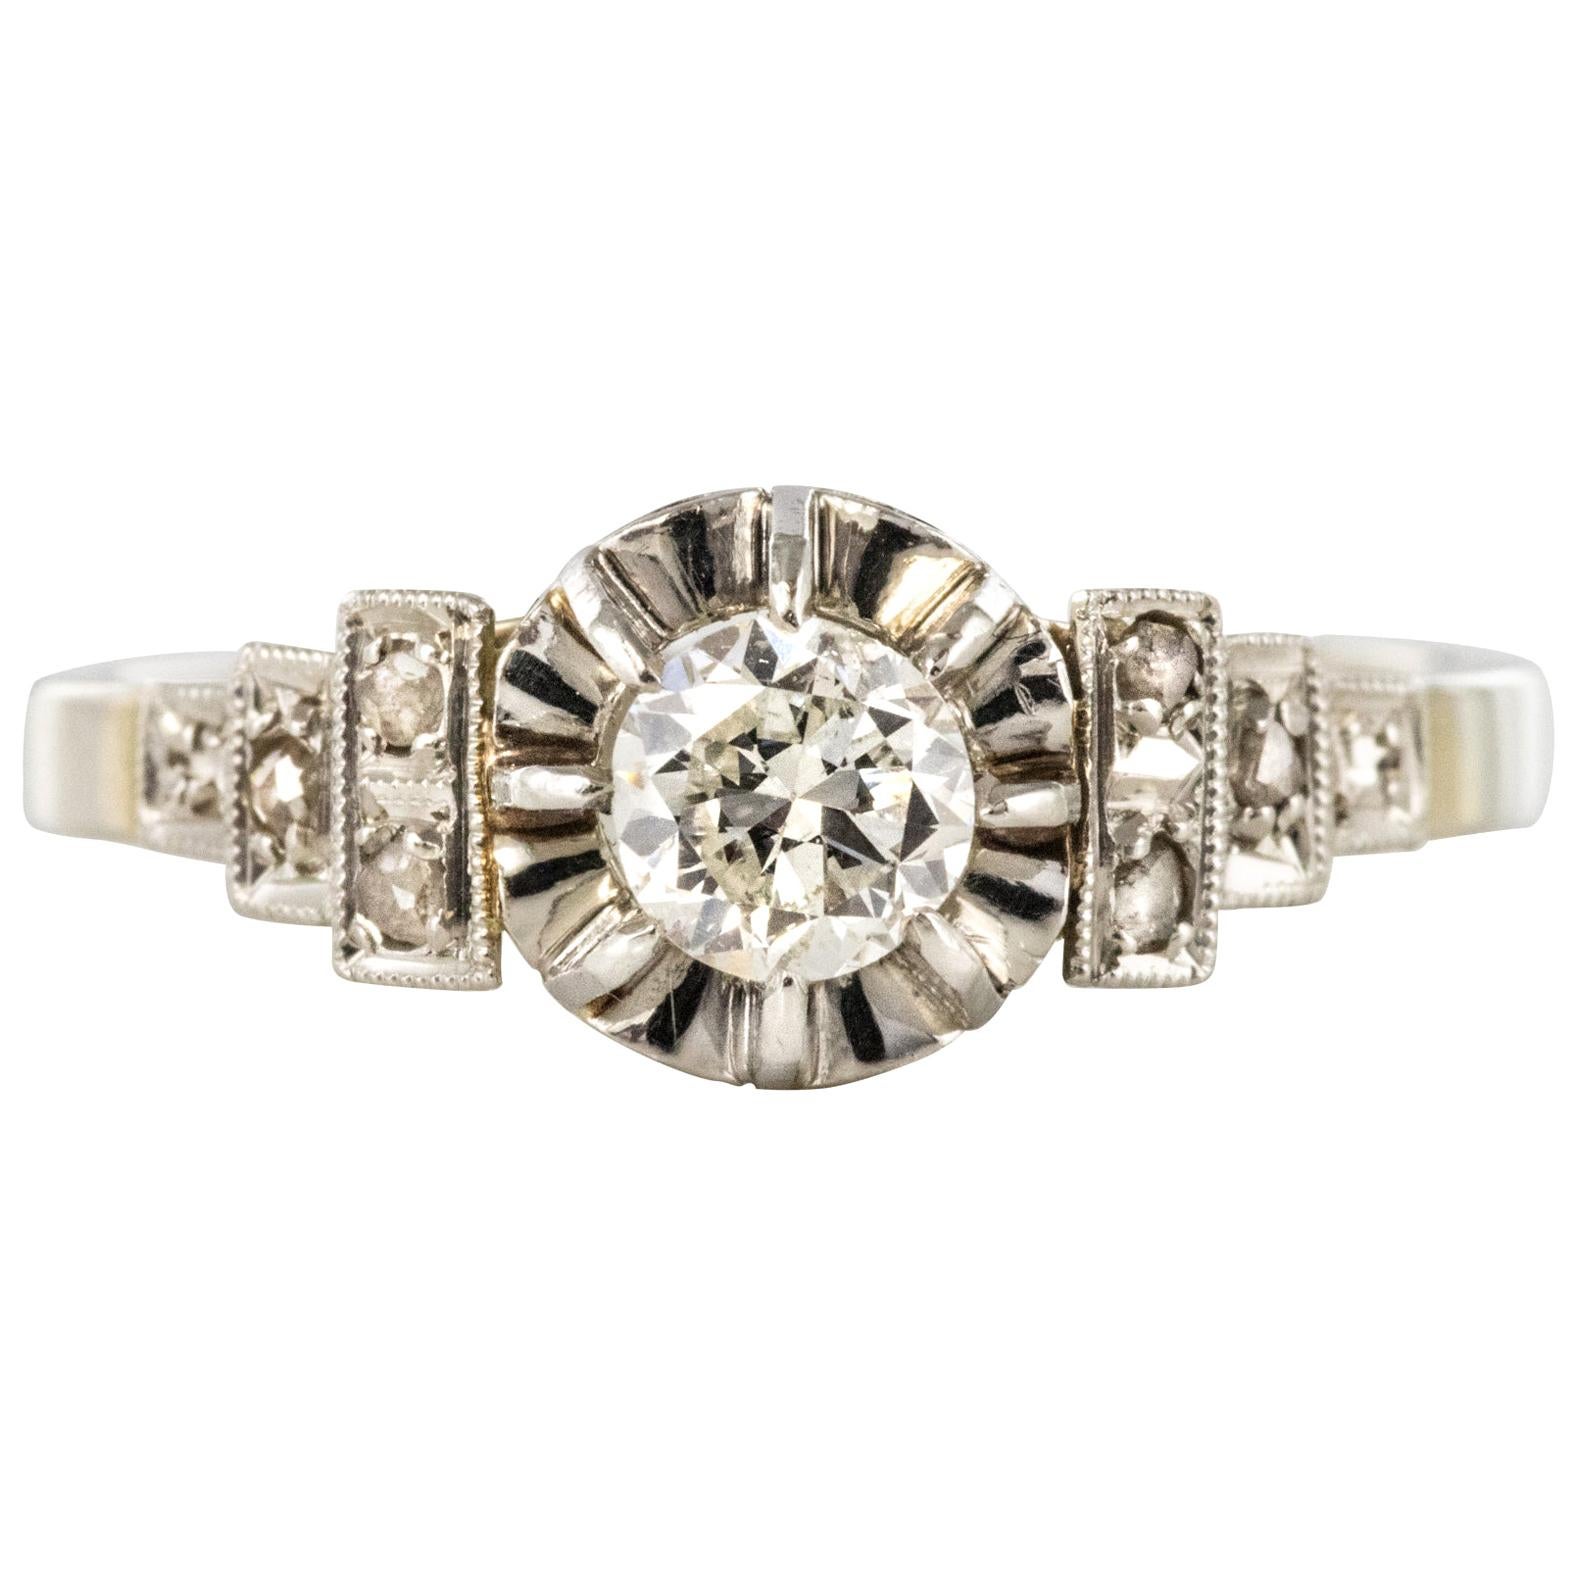 French 1920s Art Deco Diamonds 18 Karat White Gold Ring